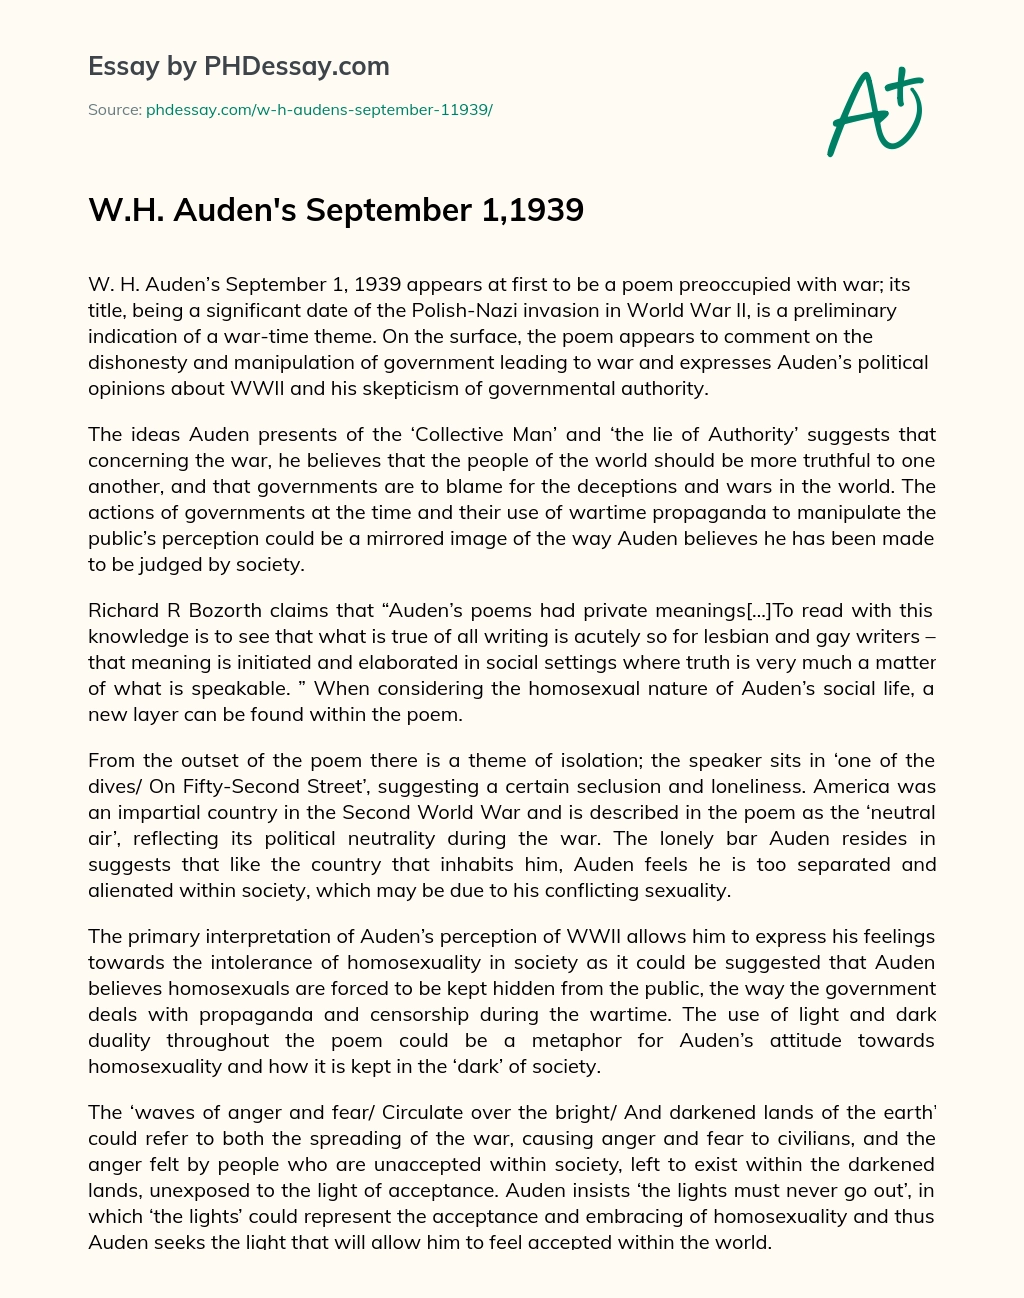 W.H. Auden’s September 1,1939 essay